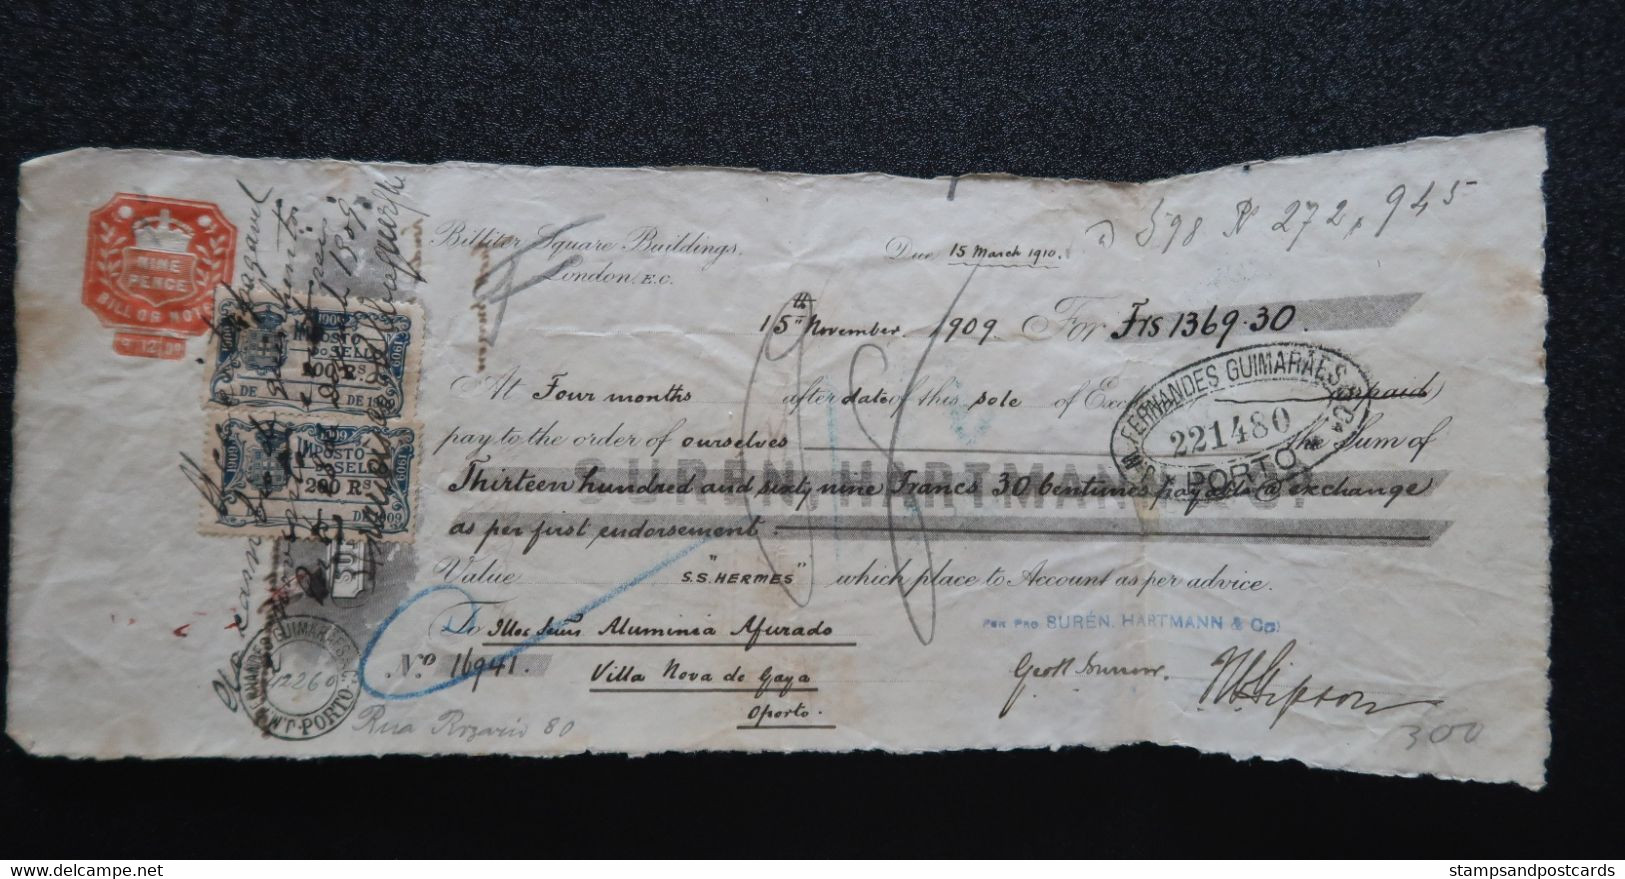 Royaume Uni Portugal Lettre De Change 1909 Timbre Fiscal Bateau S/s Hermes Ship Bill United Kingdom Revenue Stamp - Lettres & Documents